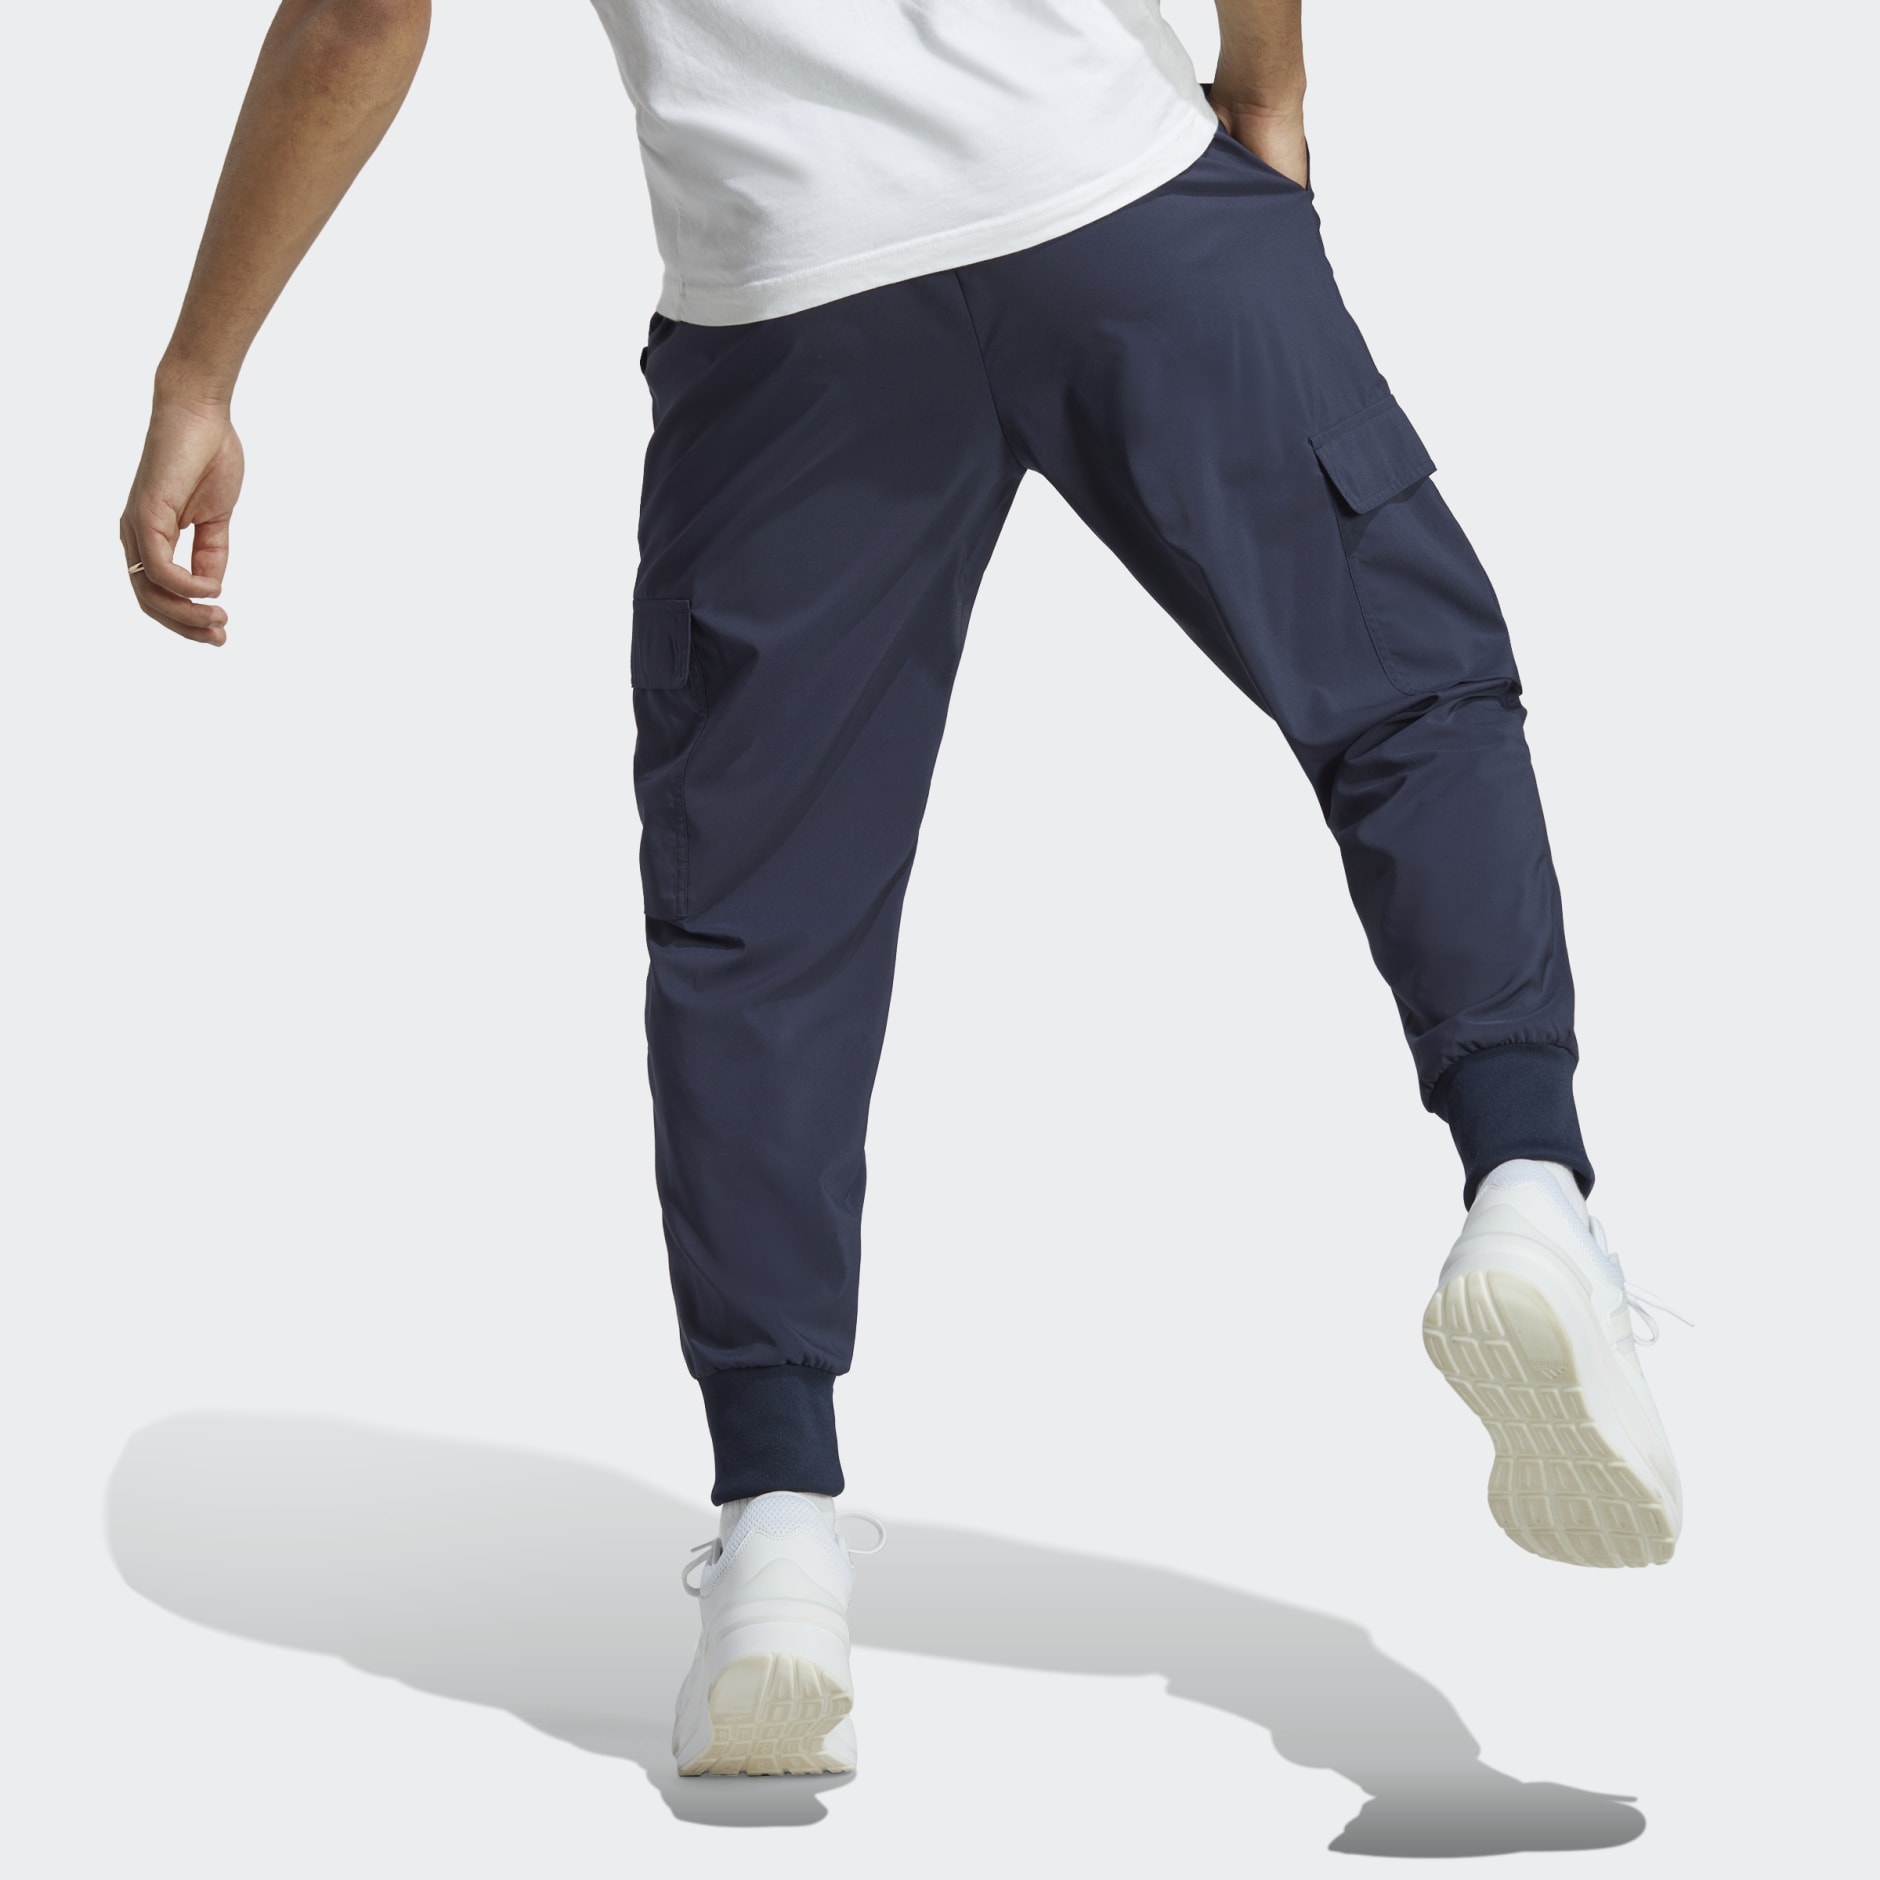 Nantersan Men's Casual Elastic Waist Jogger Pants Cargo Pants Ankle Length  Pants Black price in UAE | Amazon UAE | kanbkam